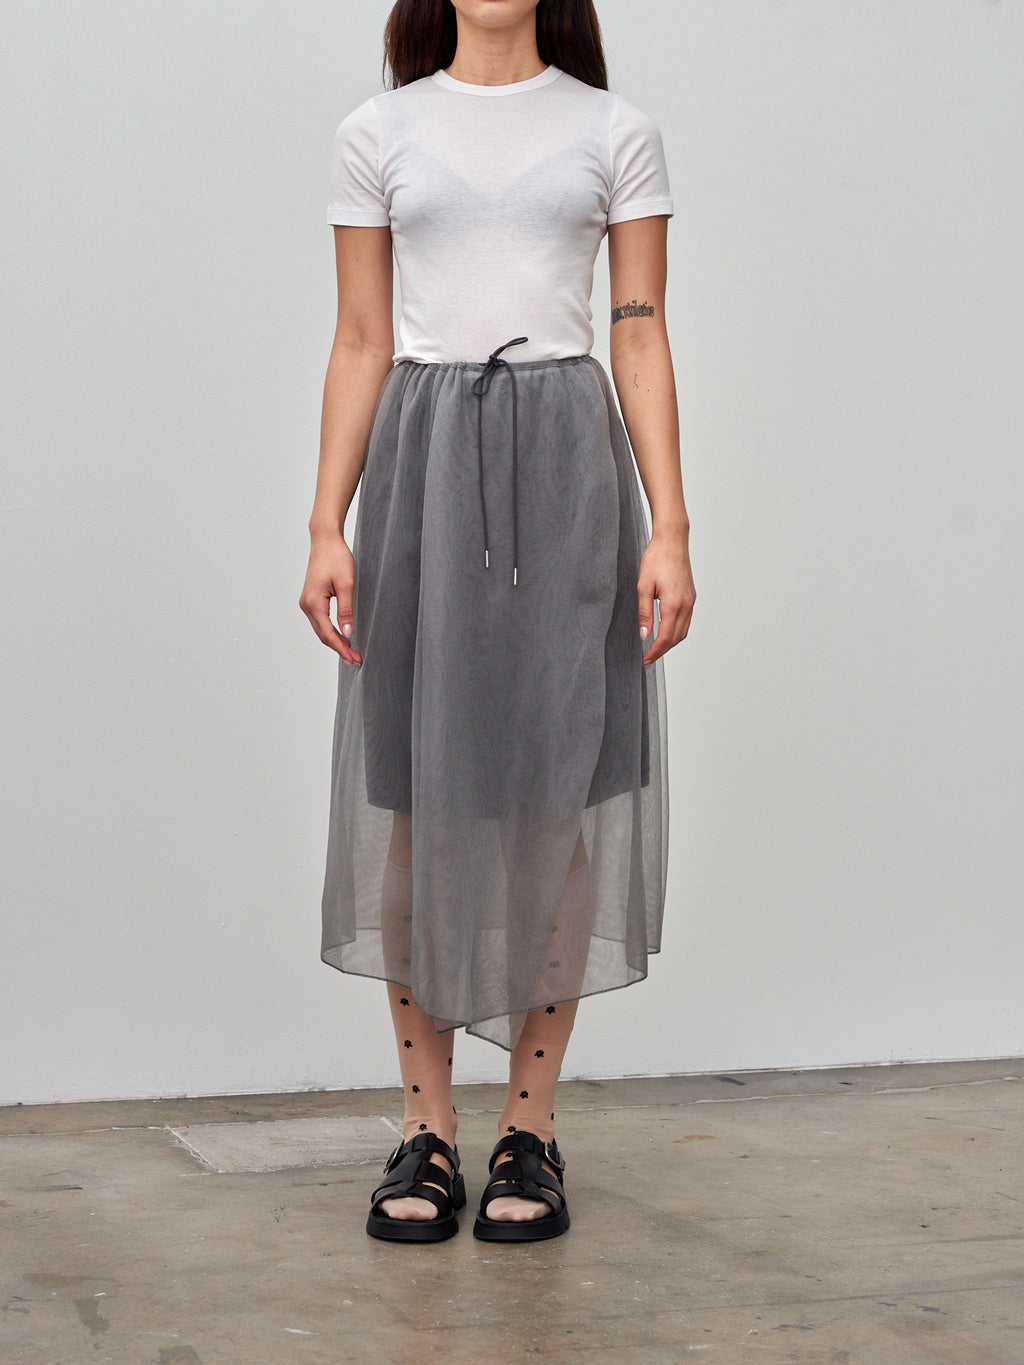 Namu Shop - Unfil Yarn Knit Skirt - Gray